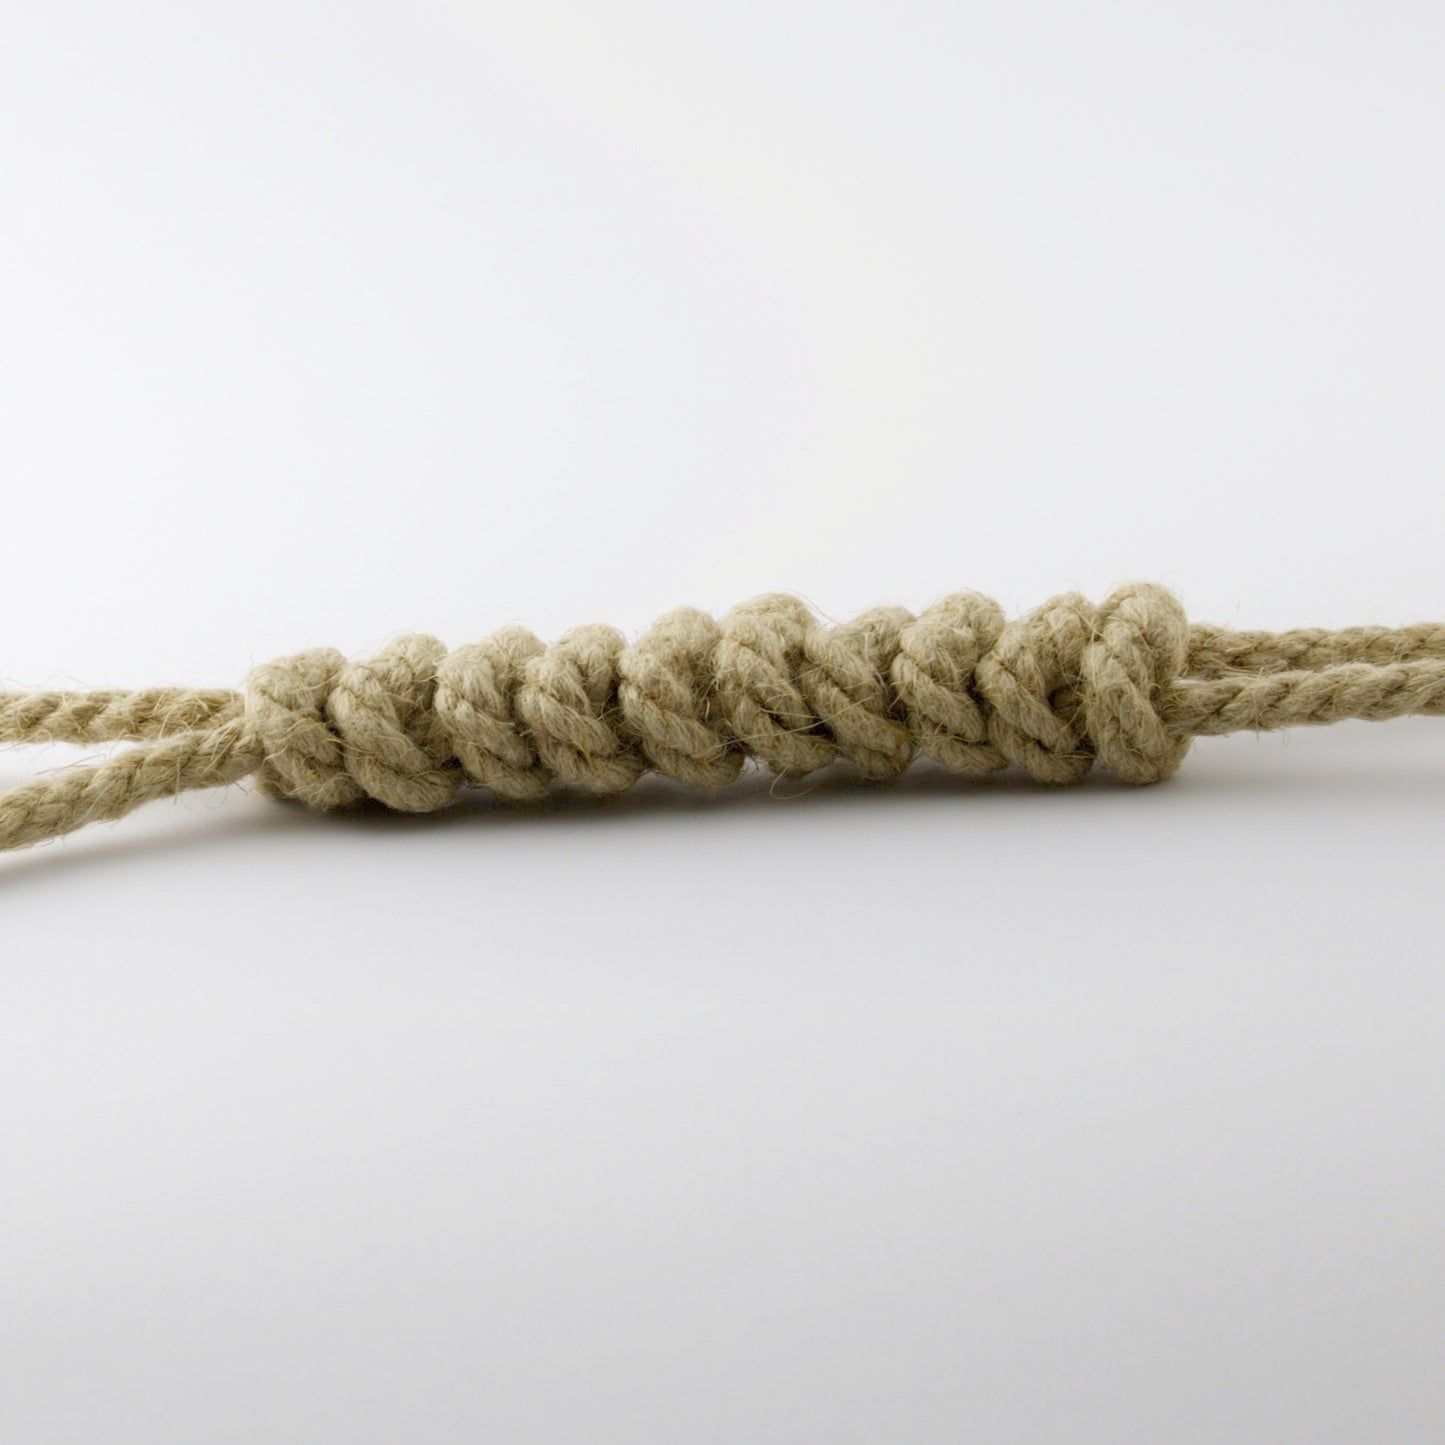 hemp rope knots dog toy